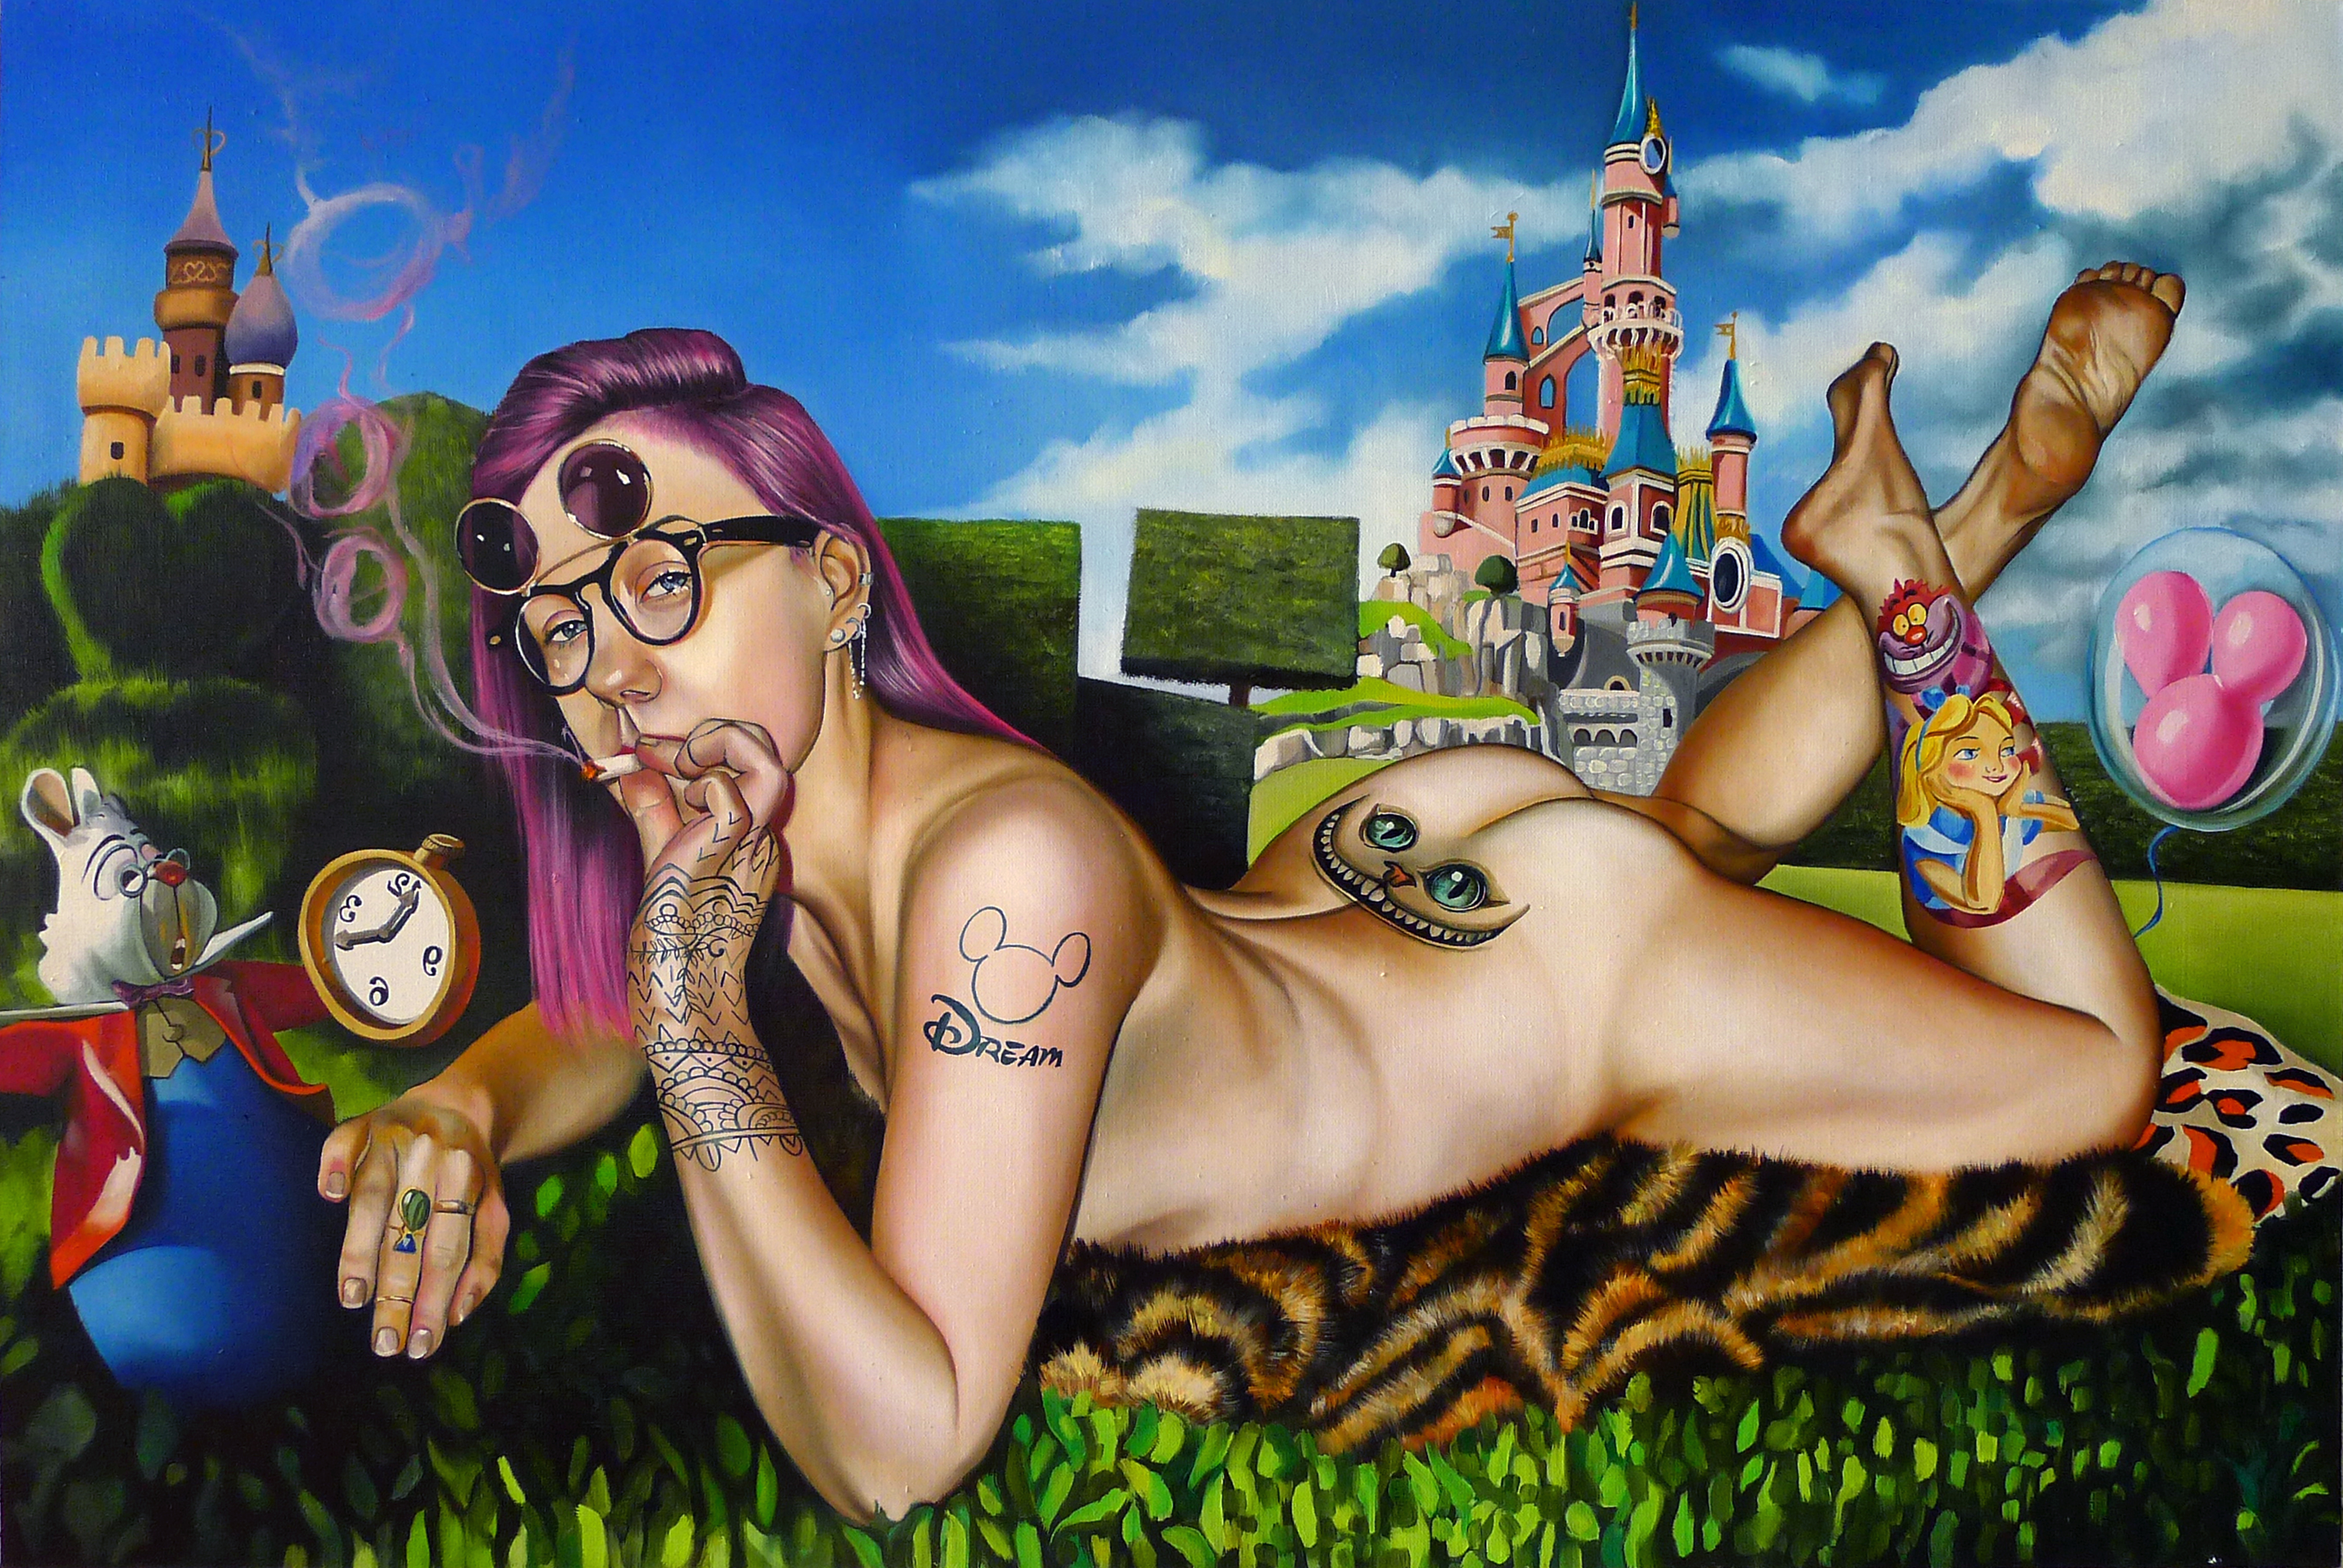 Smiley Circus - 80 x 120 cm, 2014, Öl / Lw